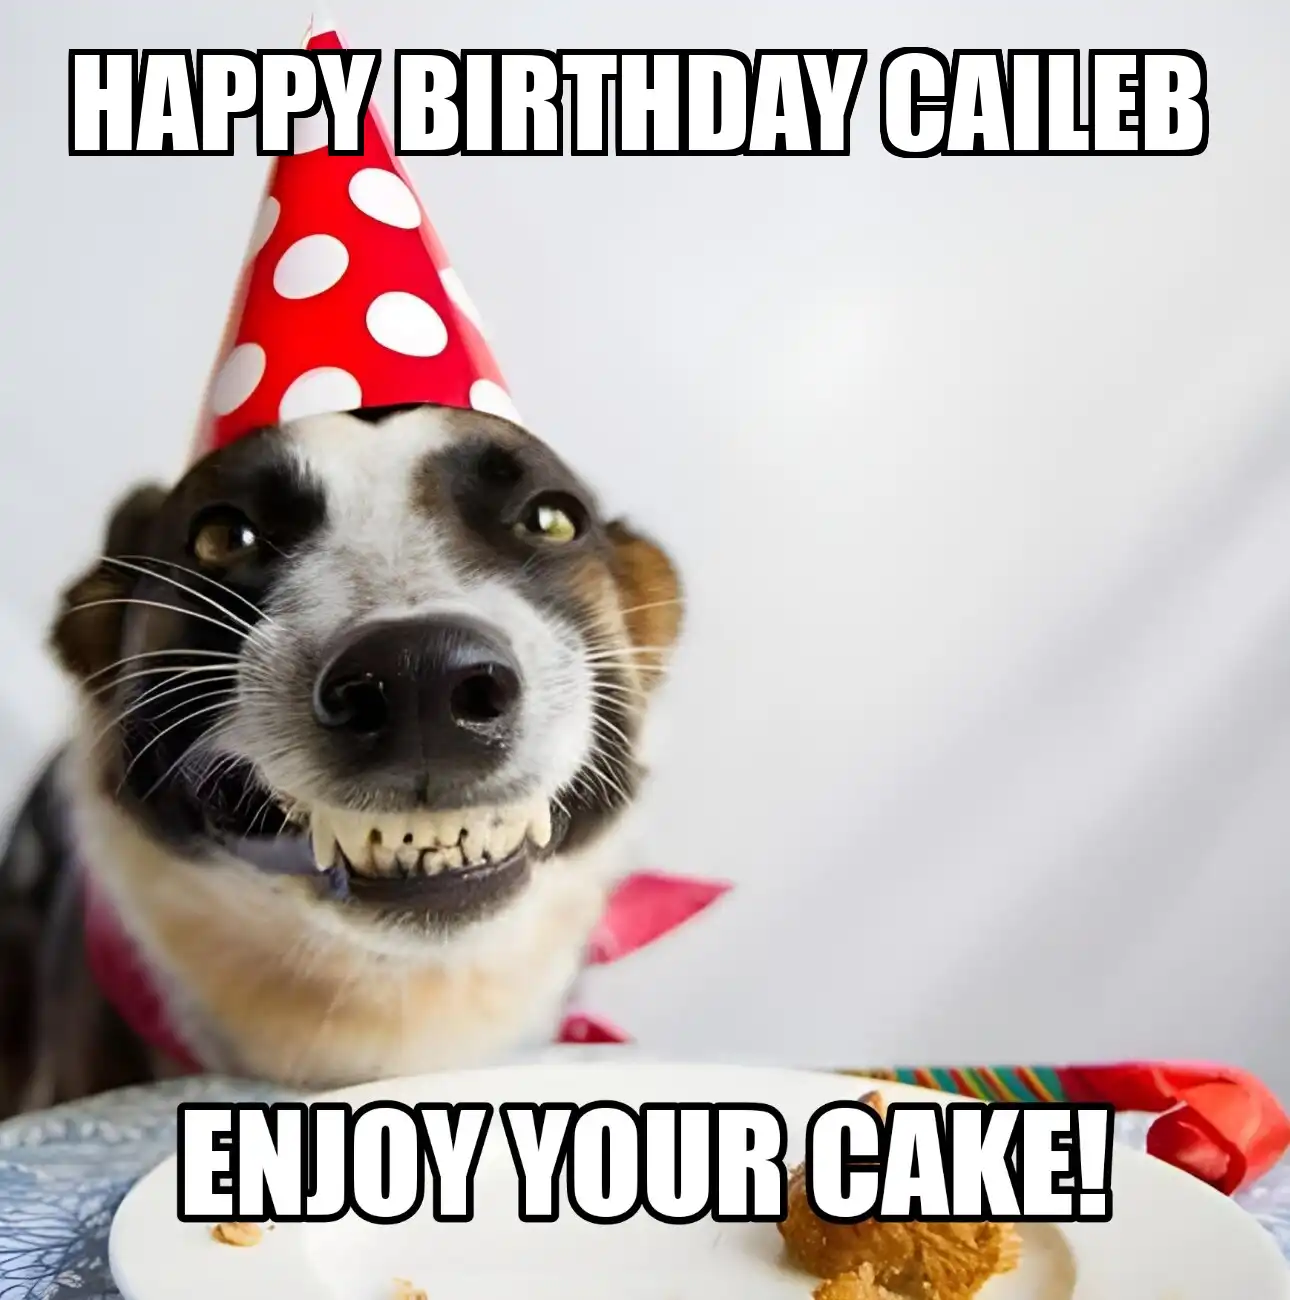 Happy Birthday Caileb Enjoy Your Cake Dog Meme